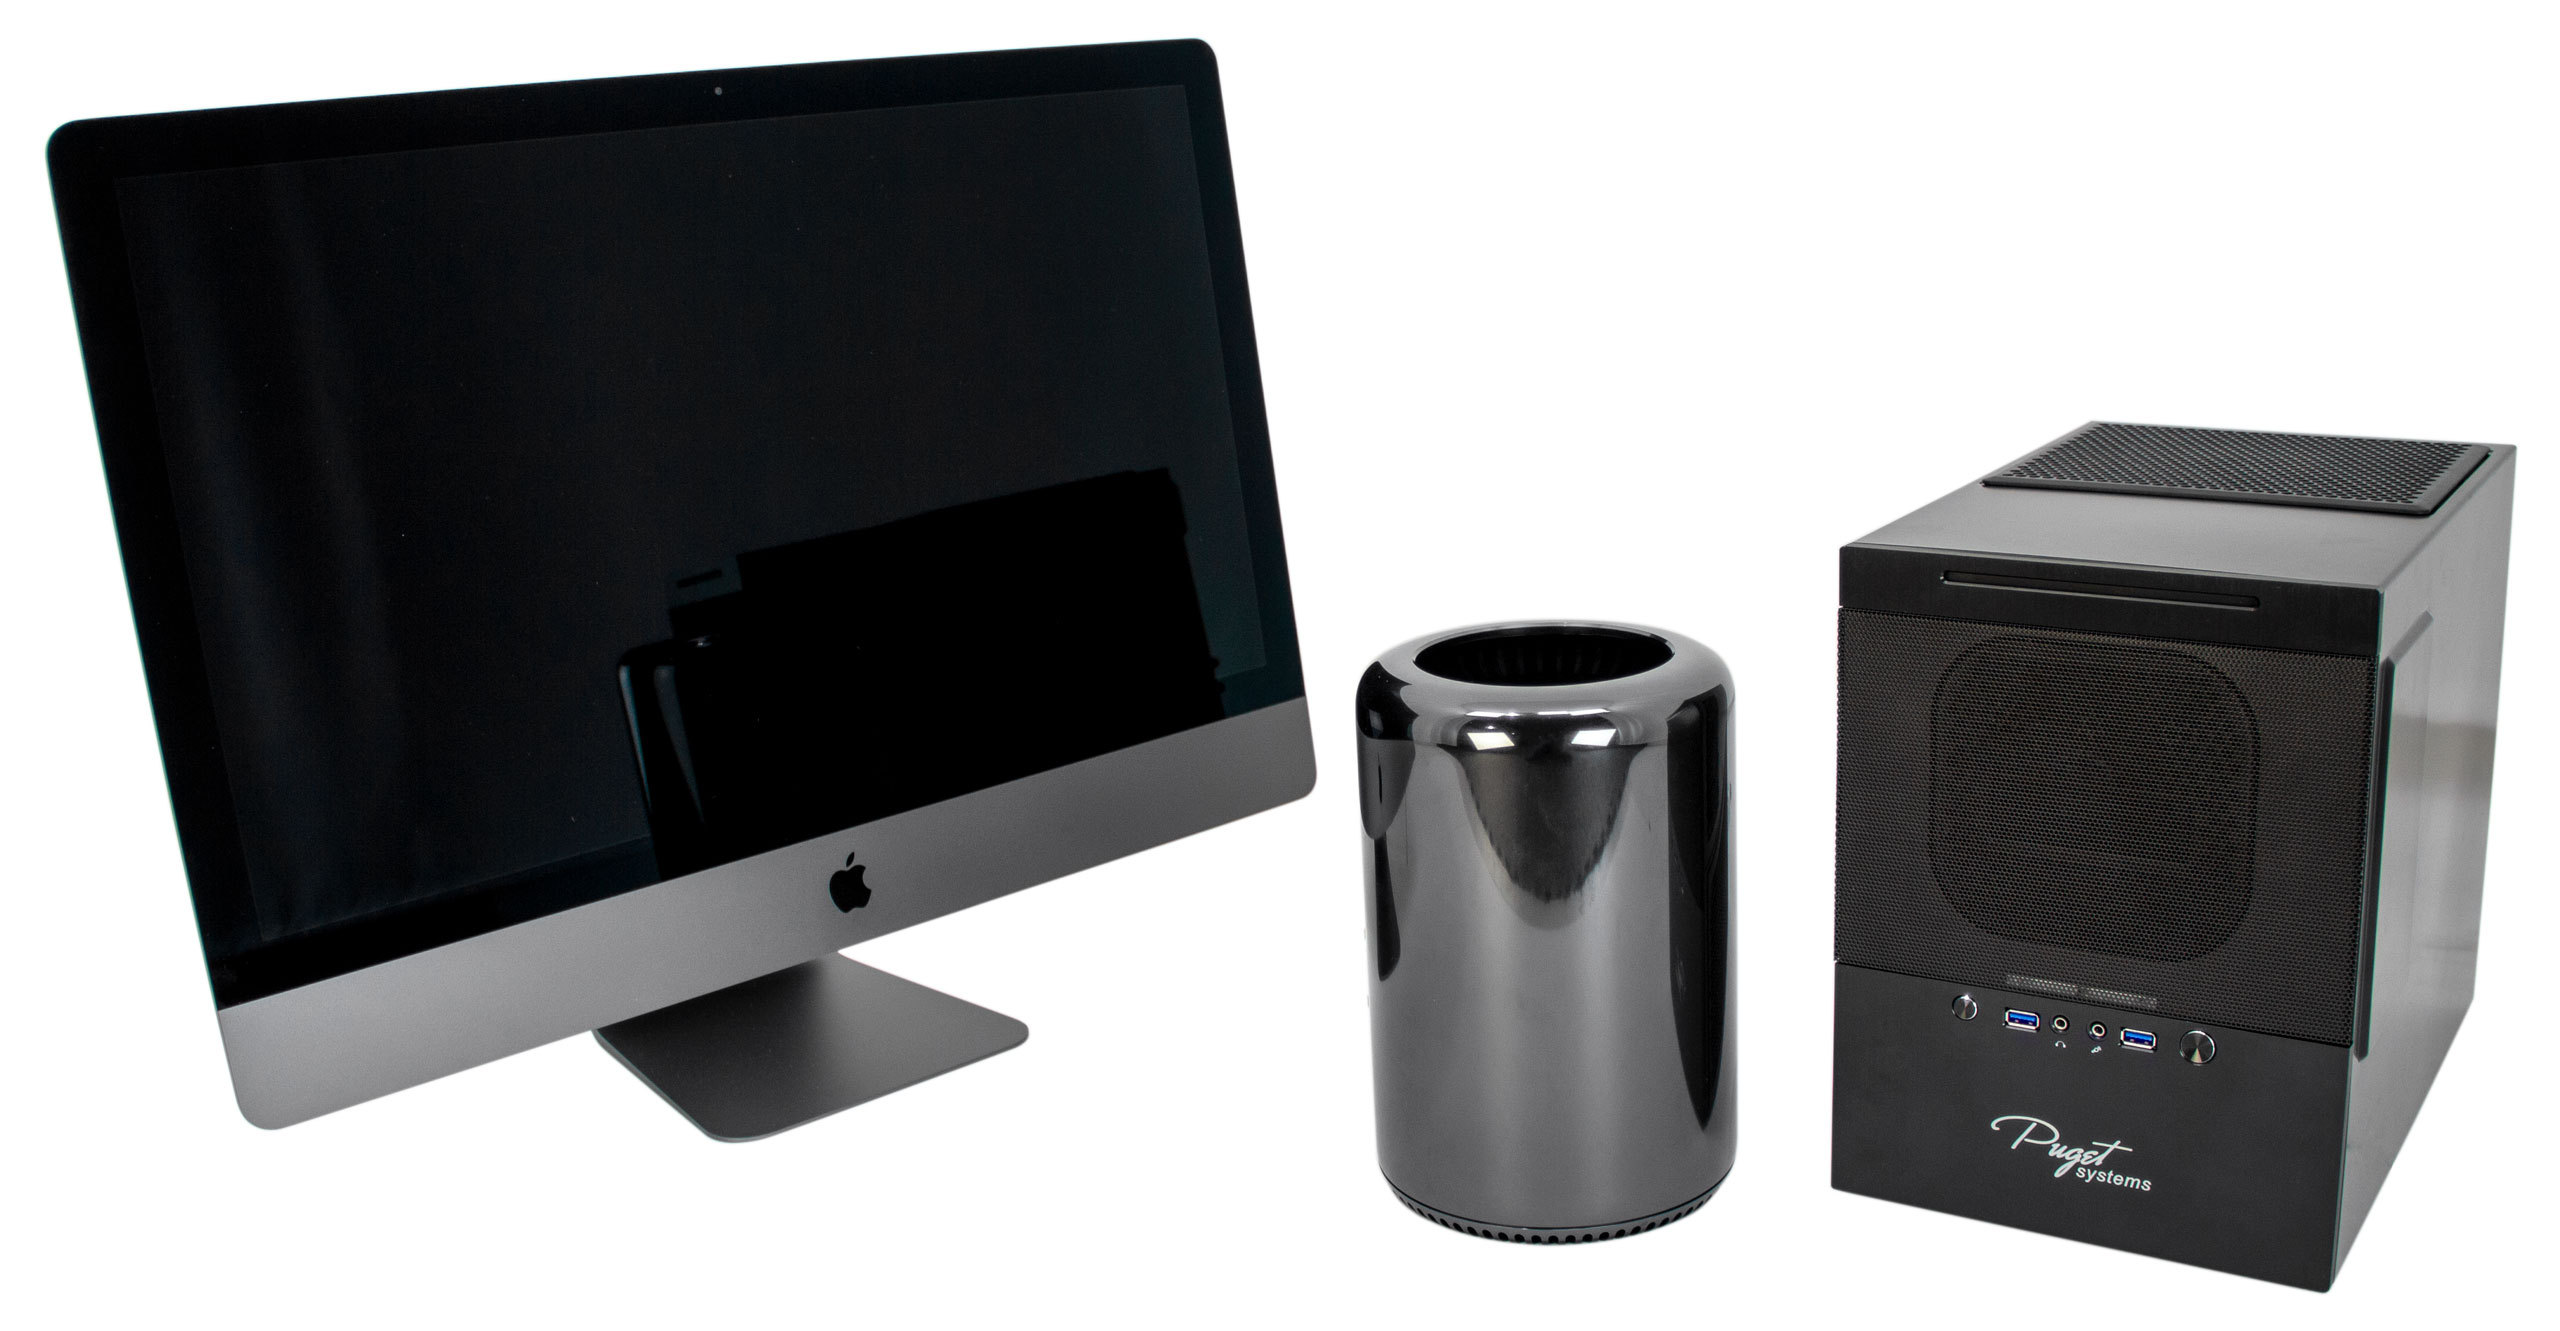 Cinema 4D: Apple iMac Mac Pro vs PC Workstations | Puget